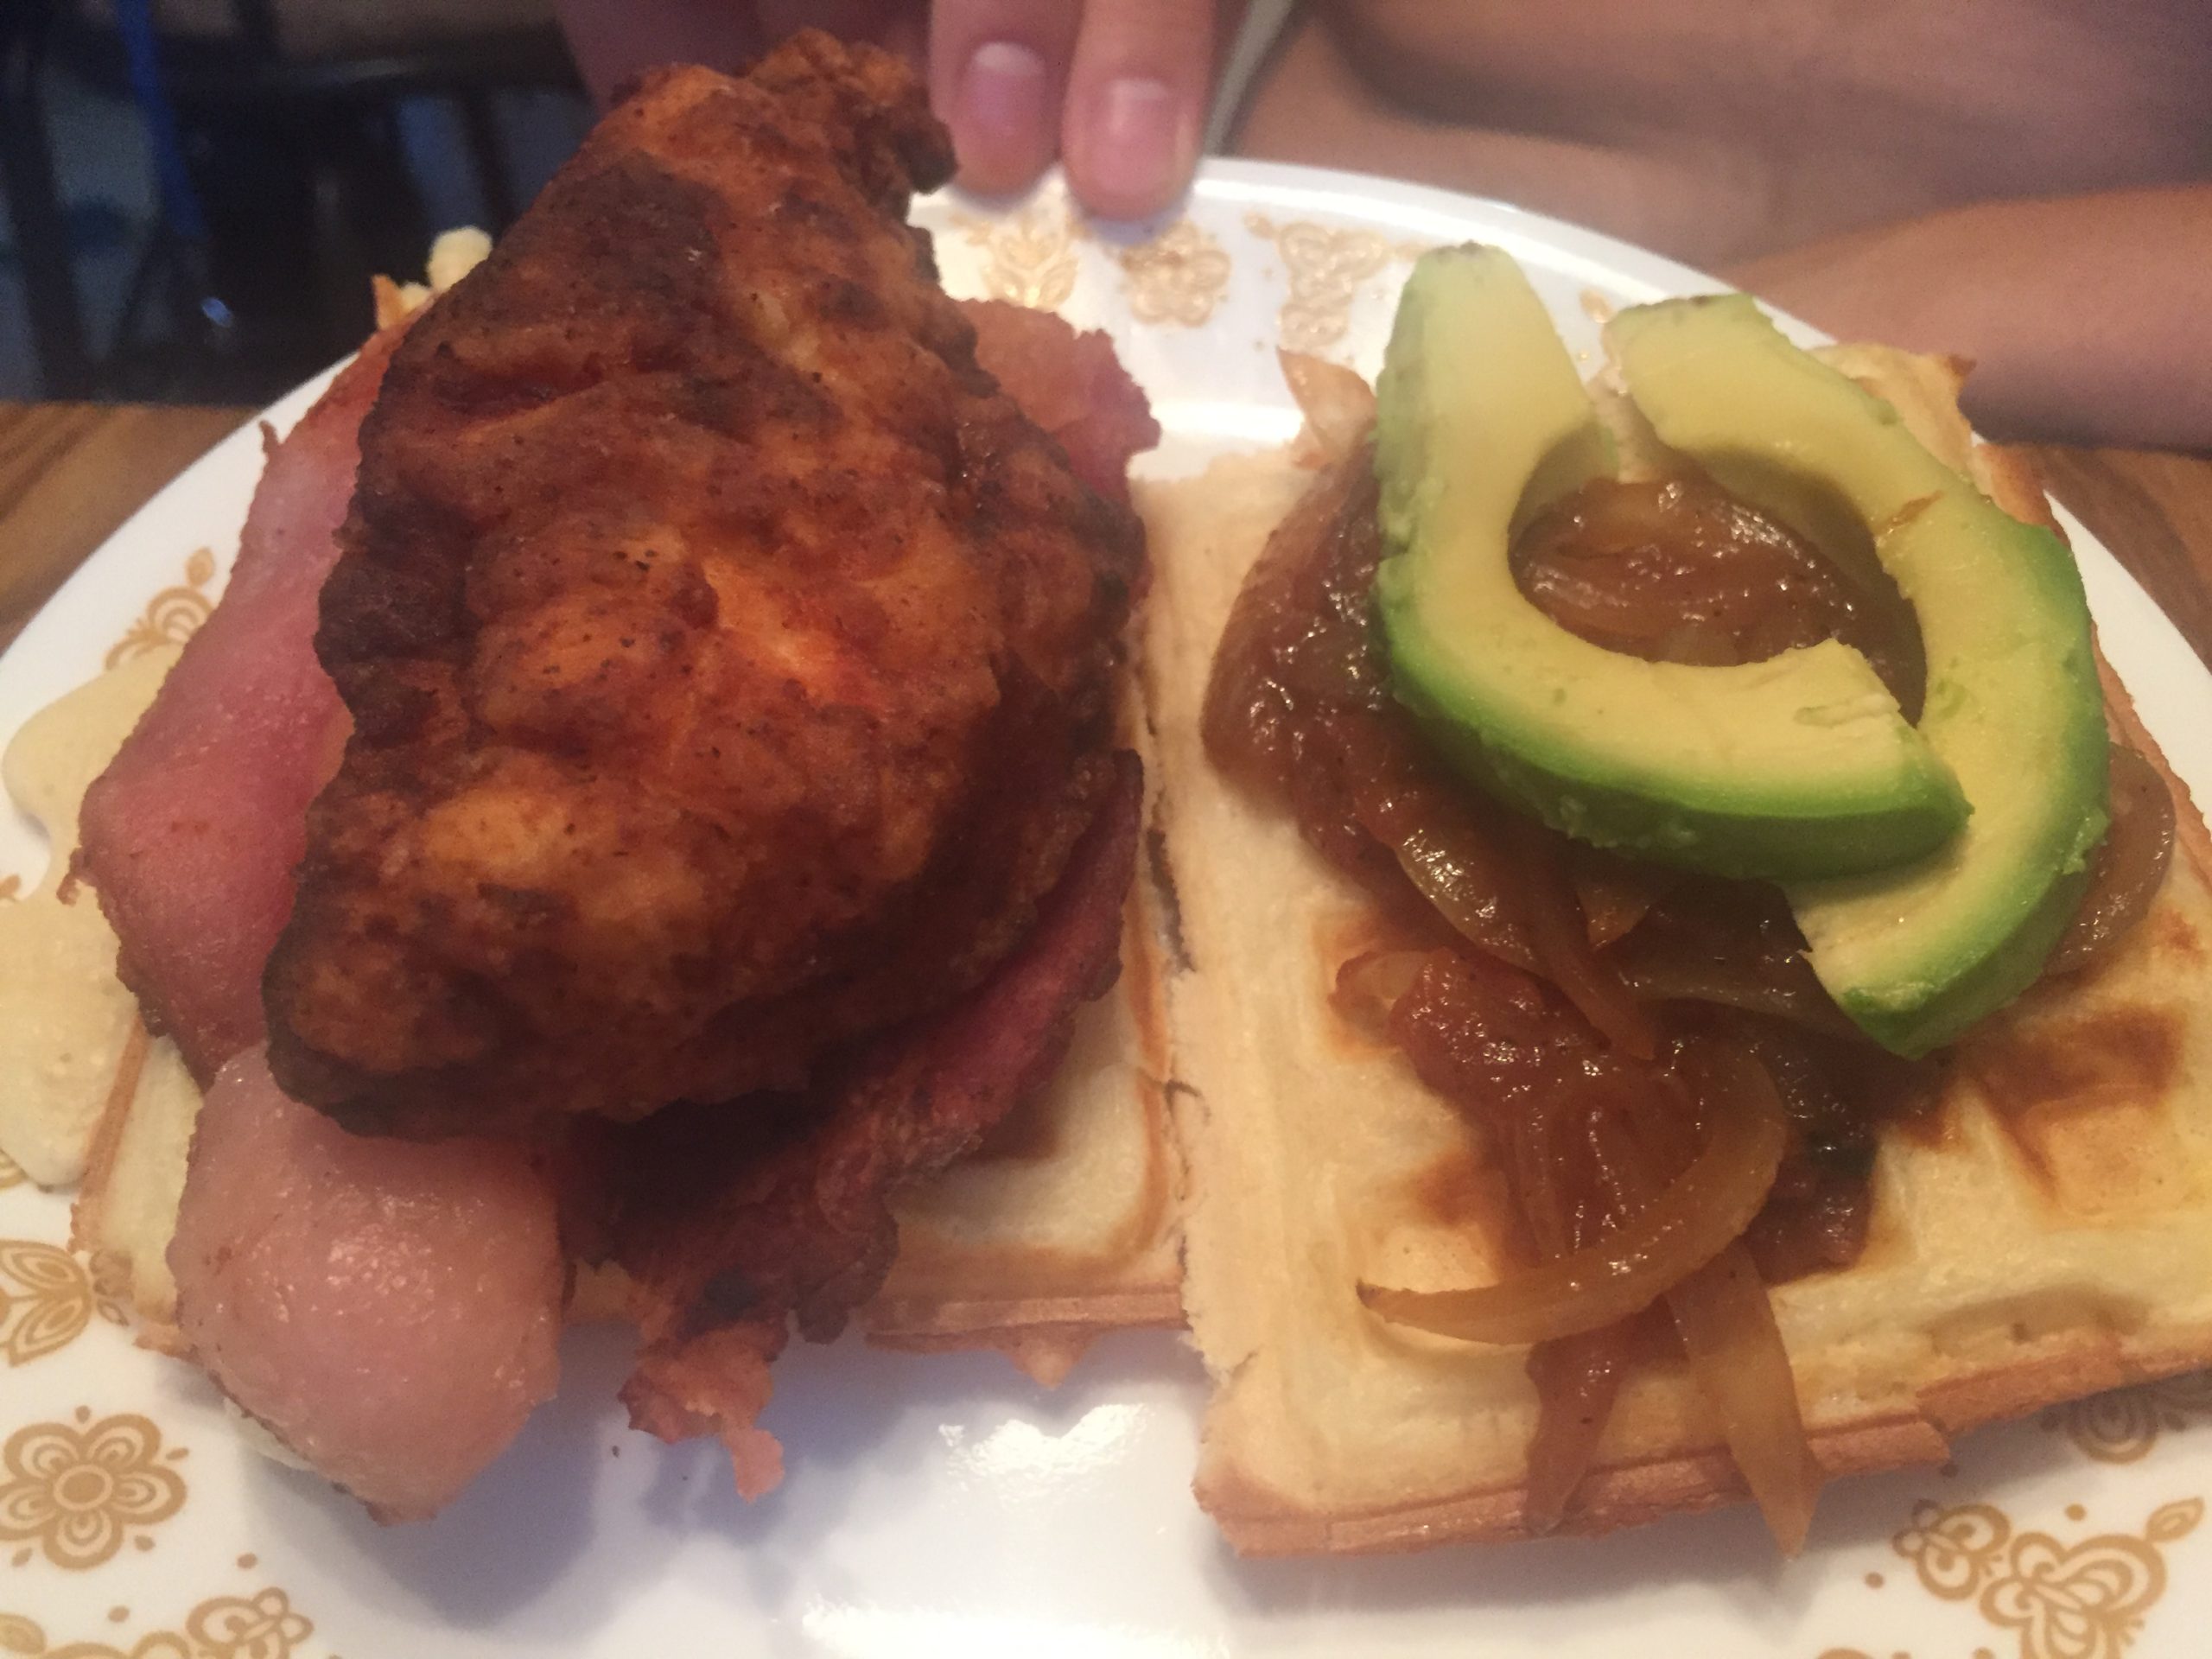 Chicken Waffle Sandwich @ bestwithchocolate.com